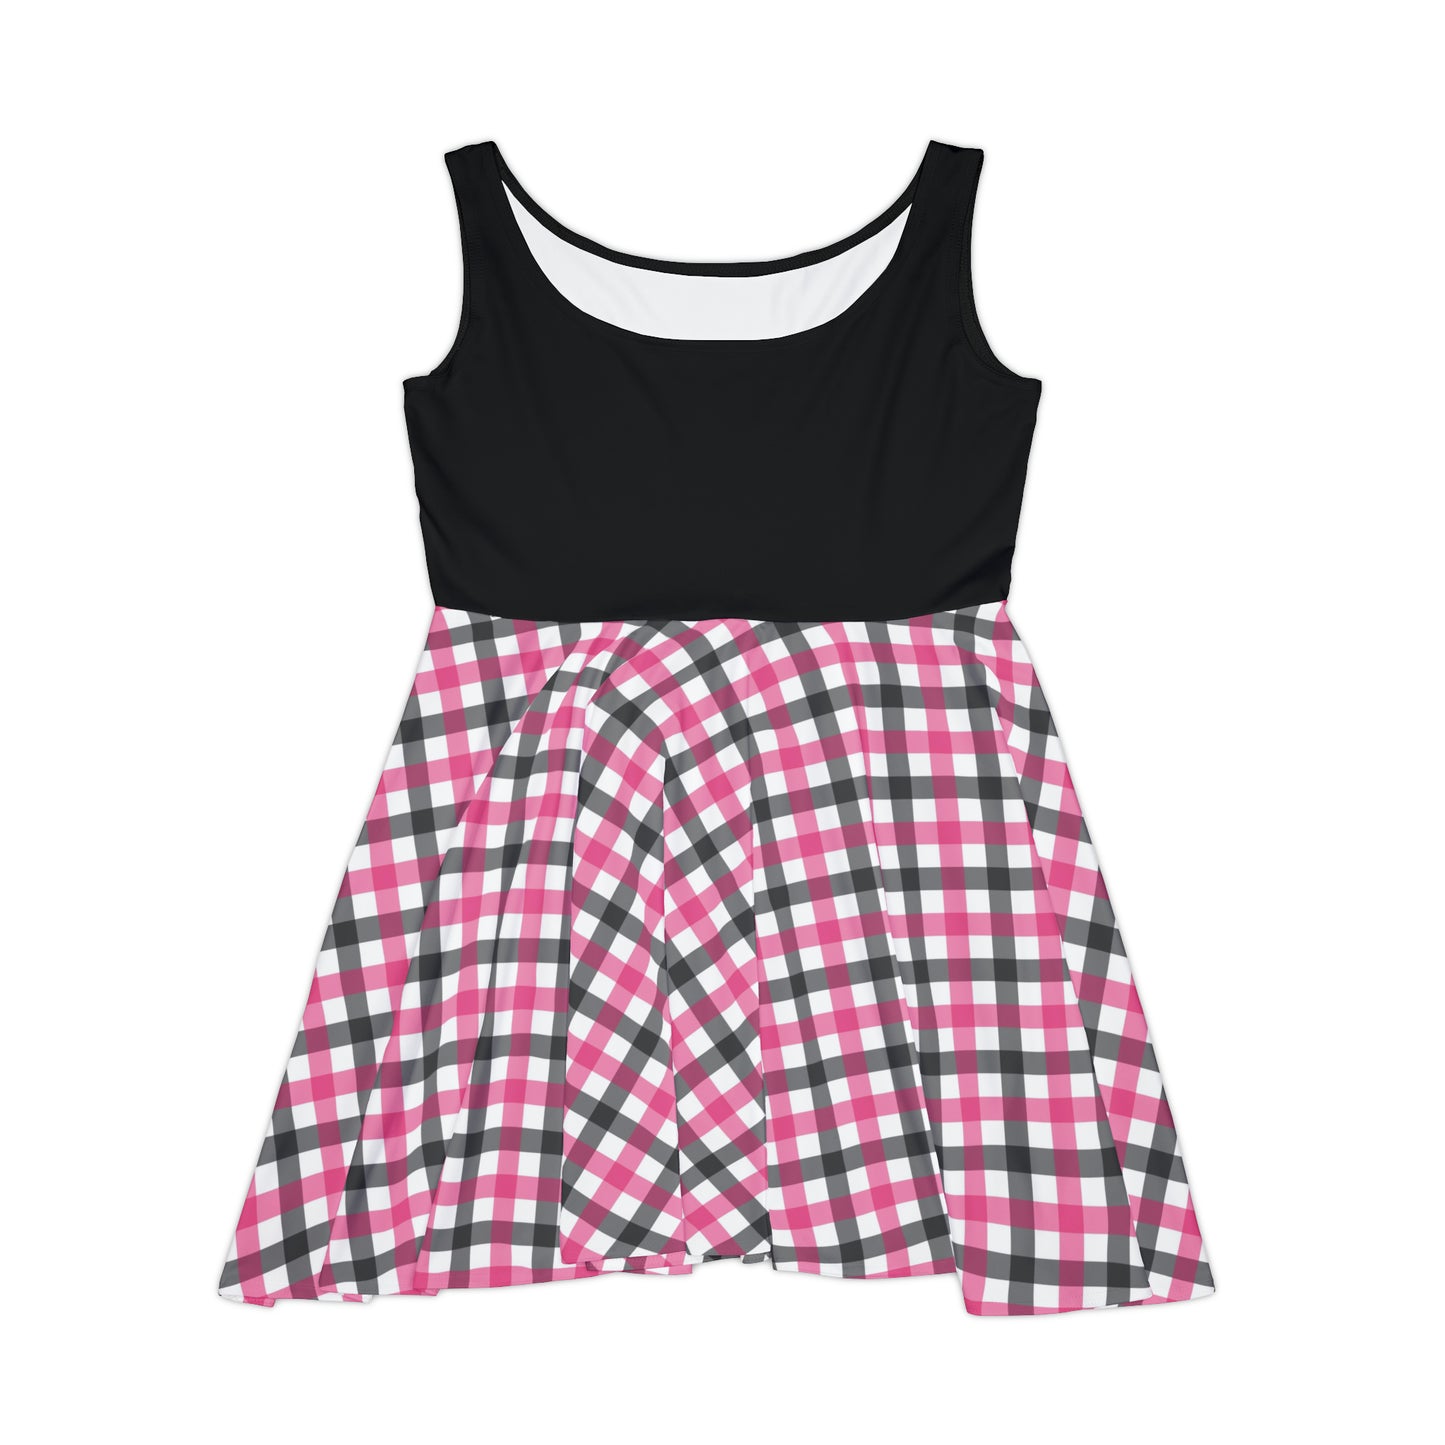 White, Pink and Black Plaid Skater Dress